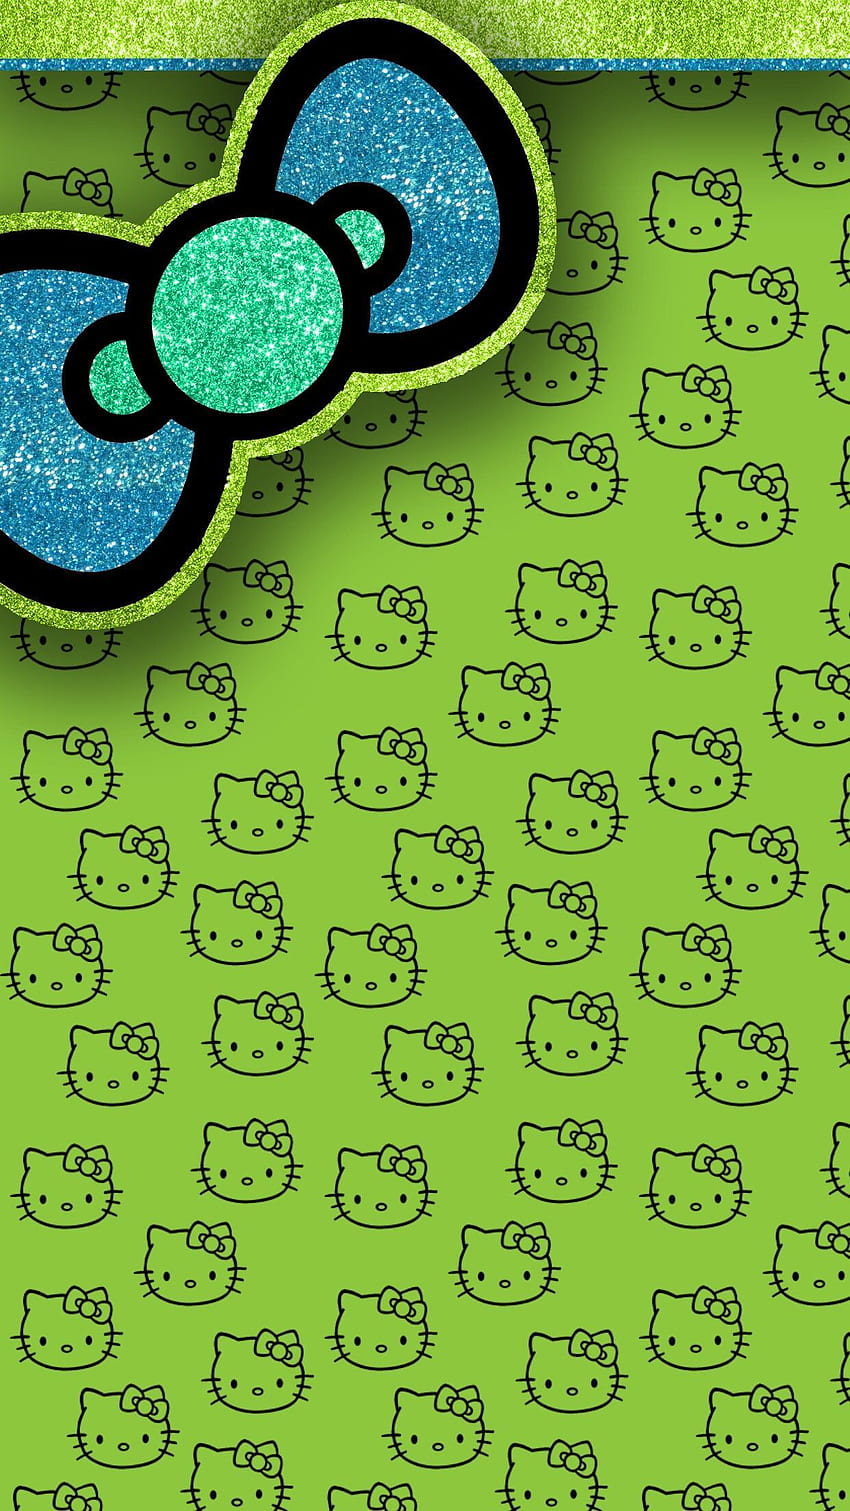 iCandy  Hello kitty wallpaper, Hello kitty backgrounds, Kitty